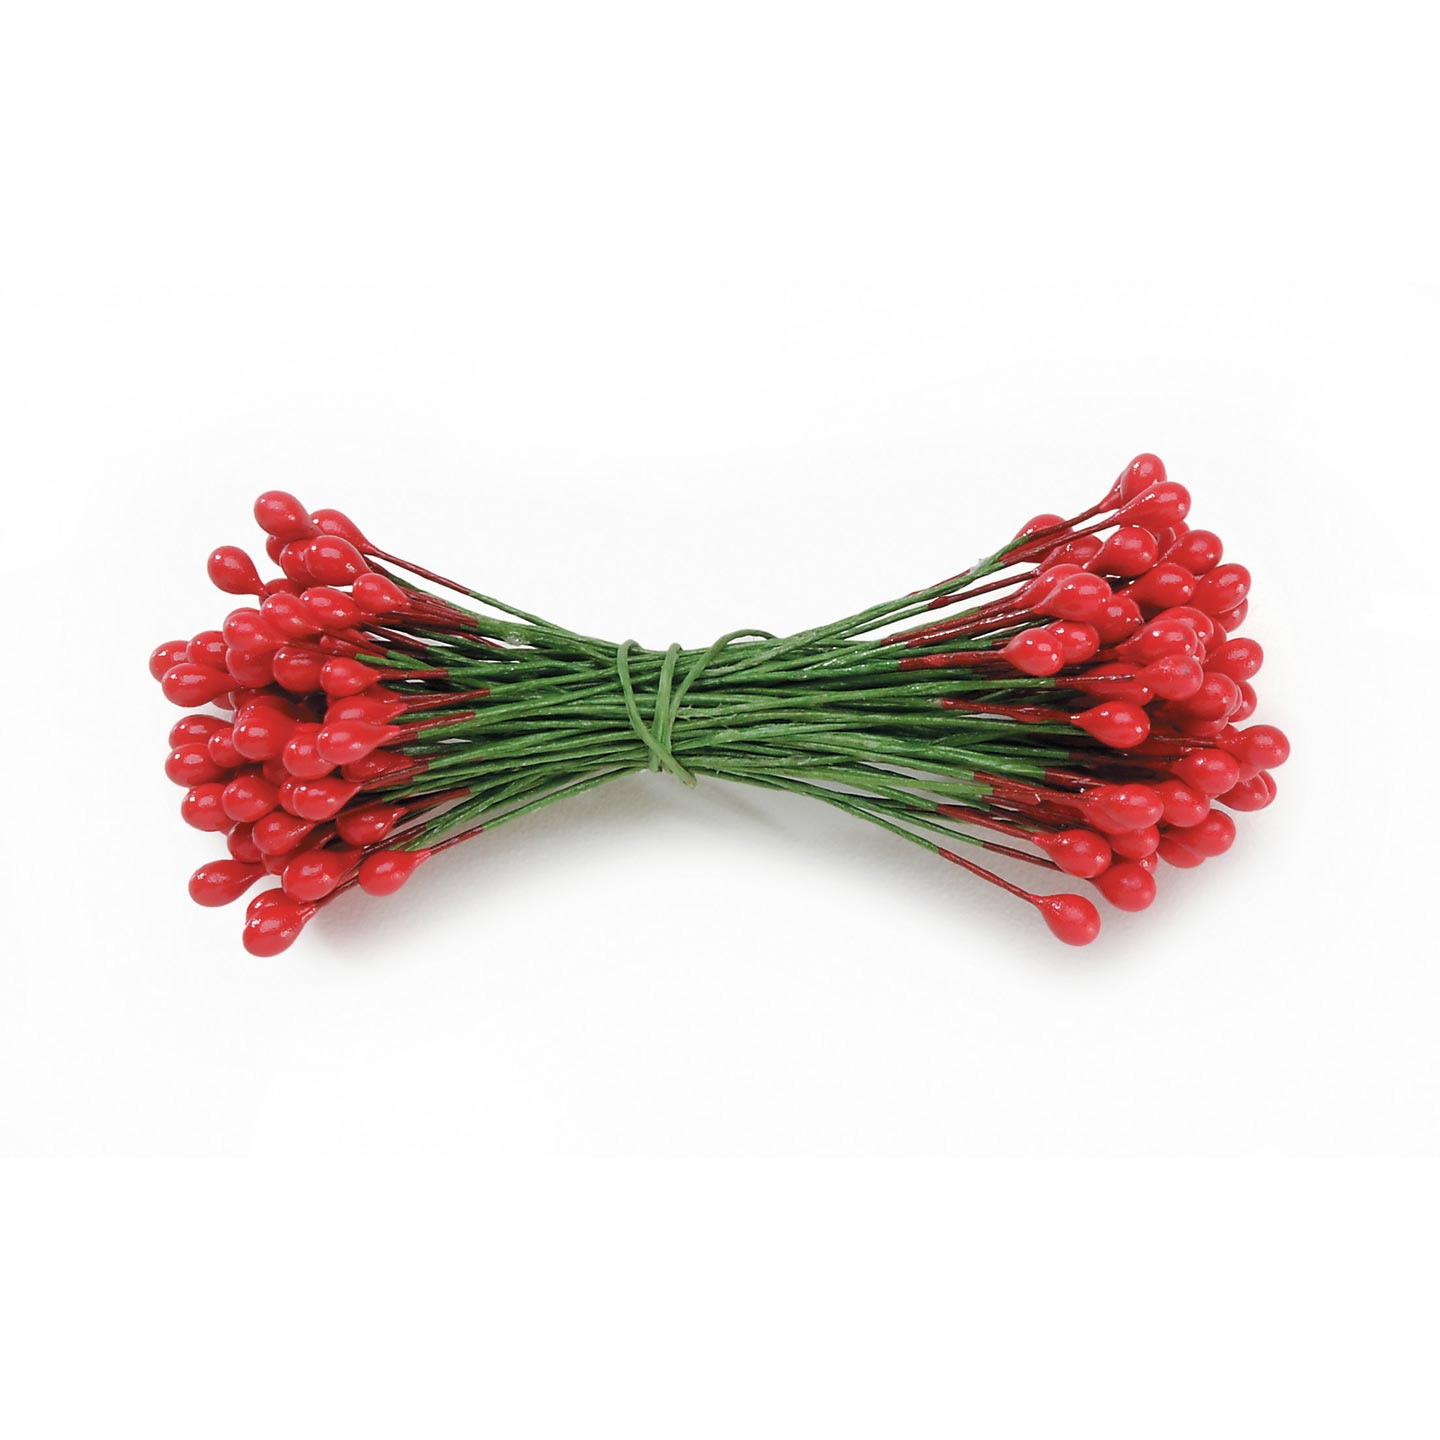 Artificial Stamens - Faux Stamens - Floral Supplies